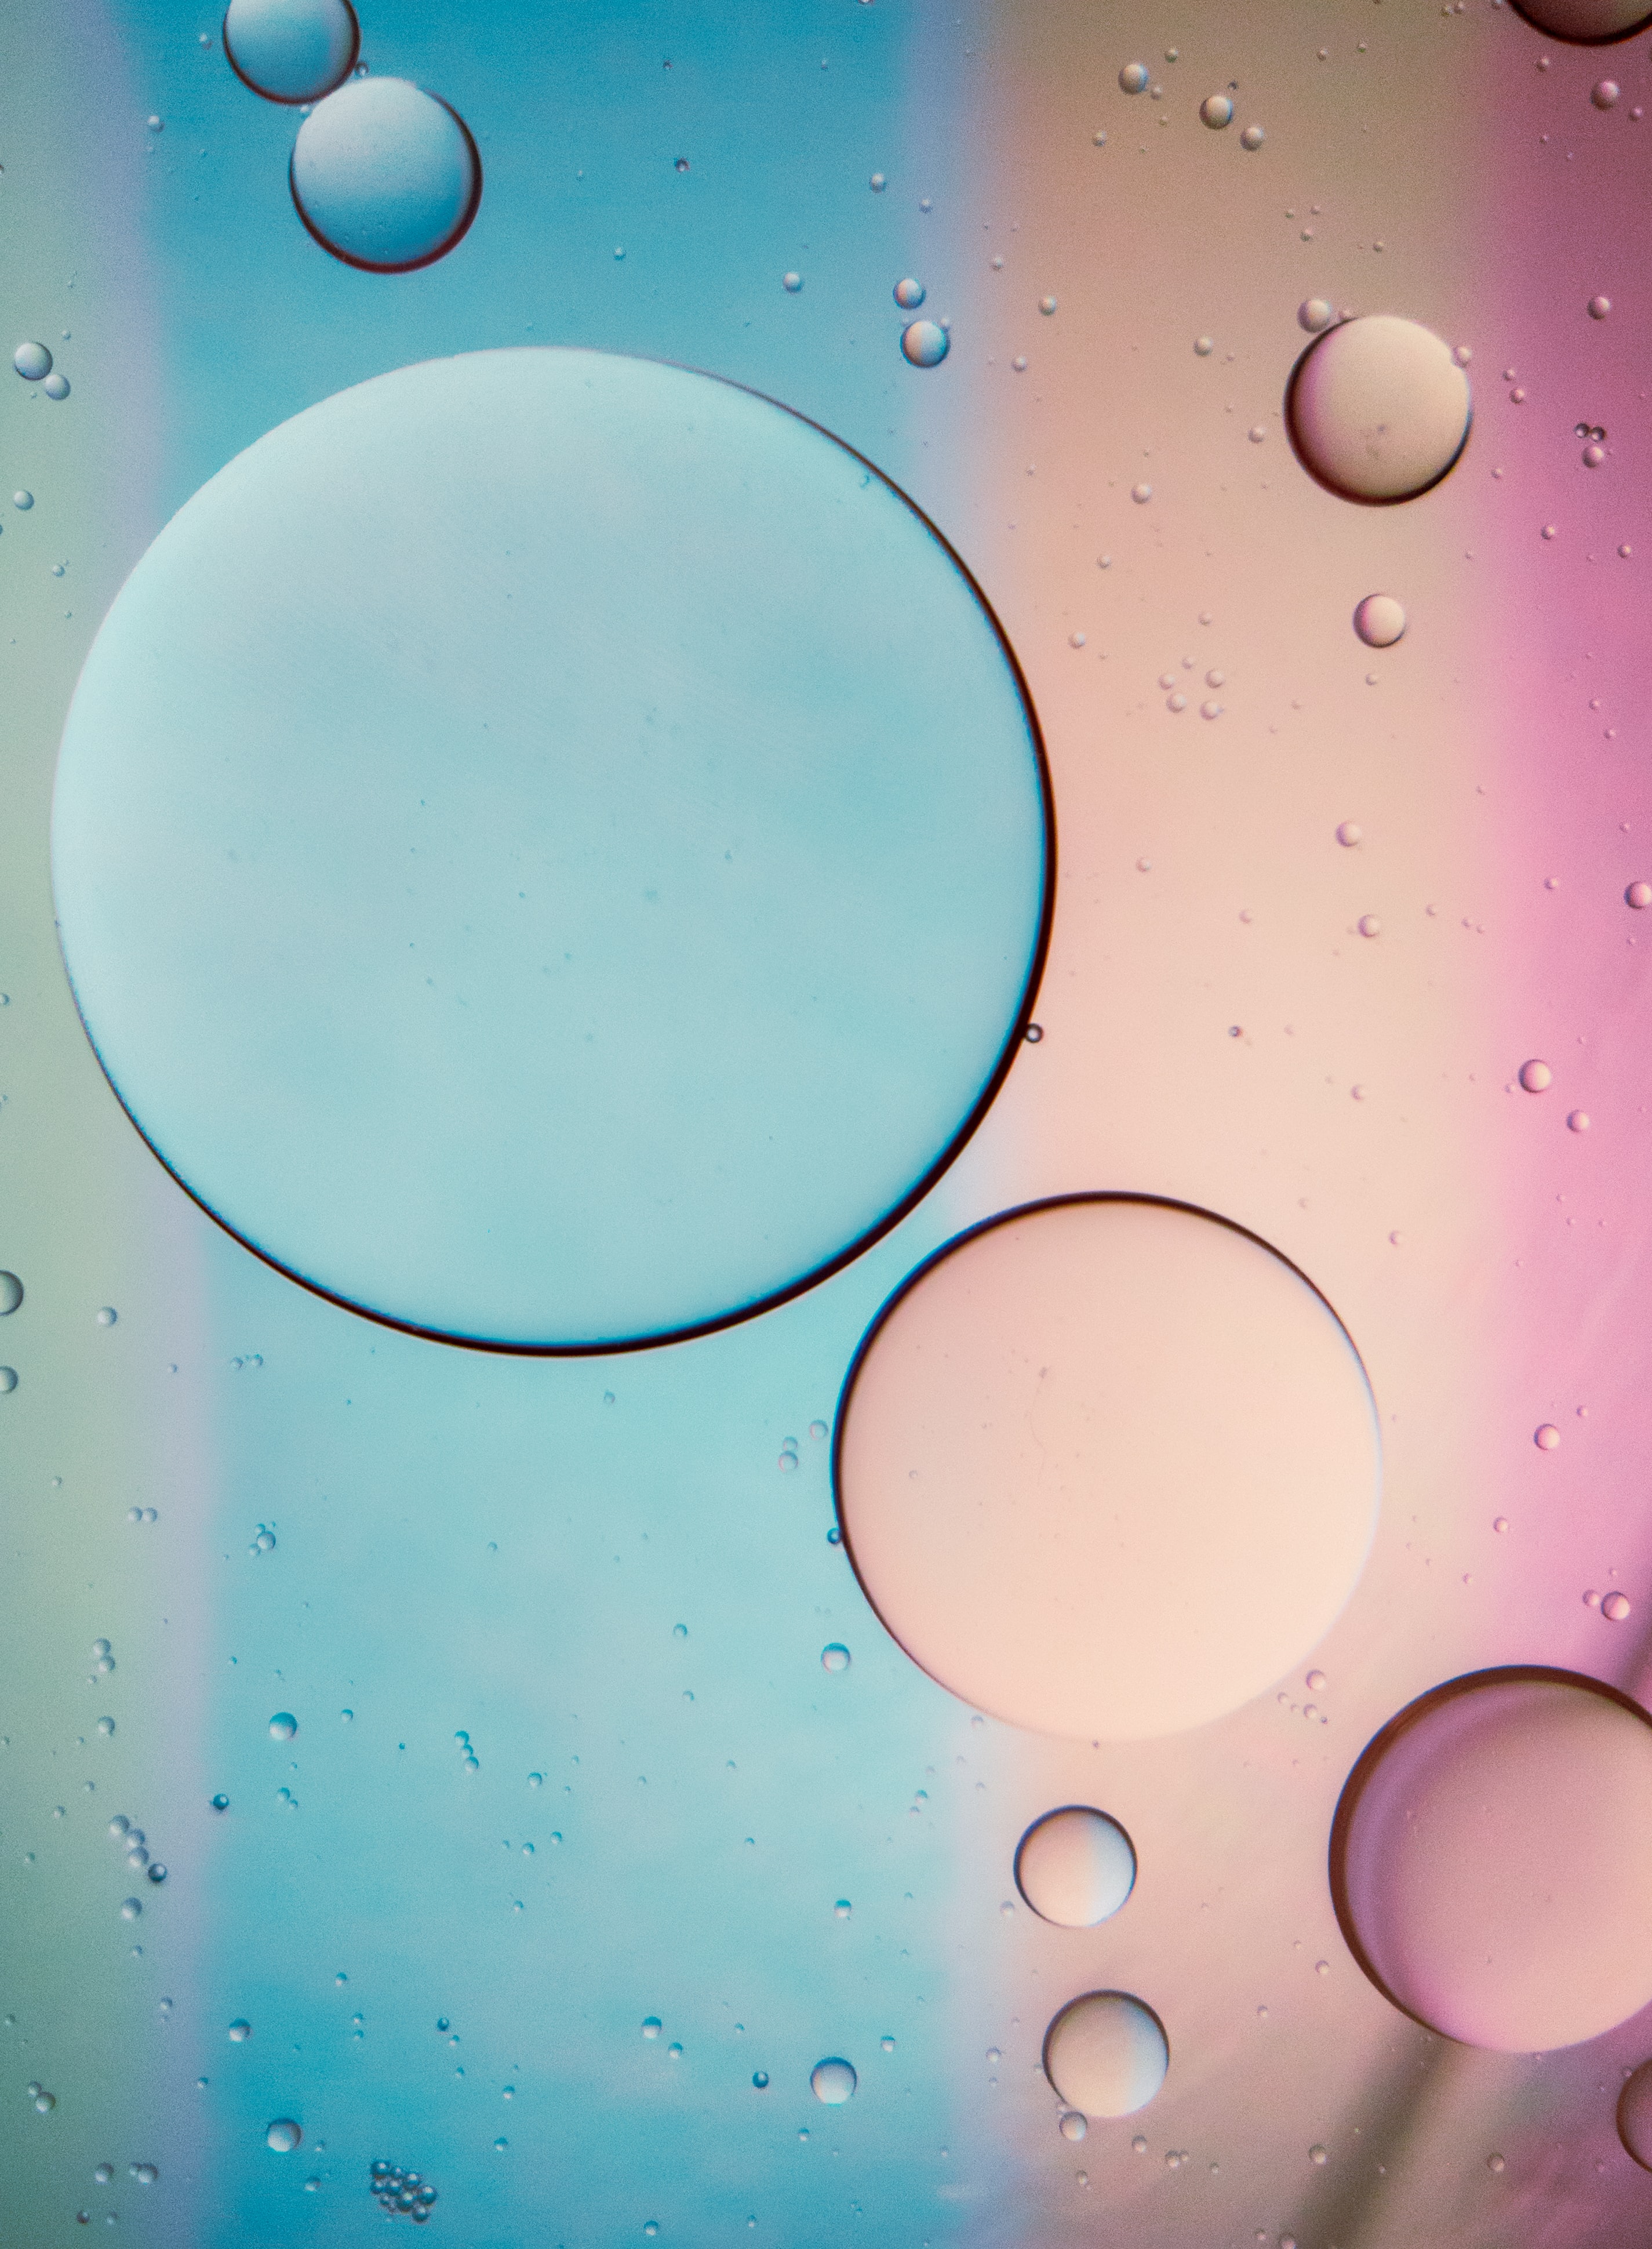 Download Bubbles wallpaper for mobile phone, free Bubbles HD picture